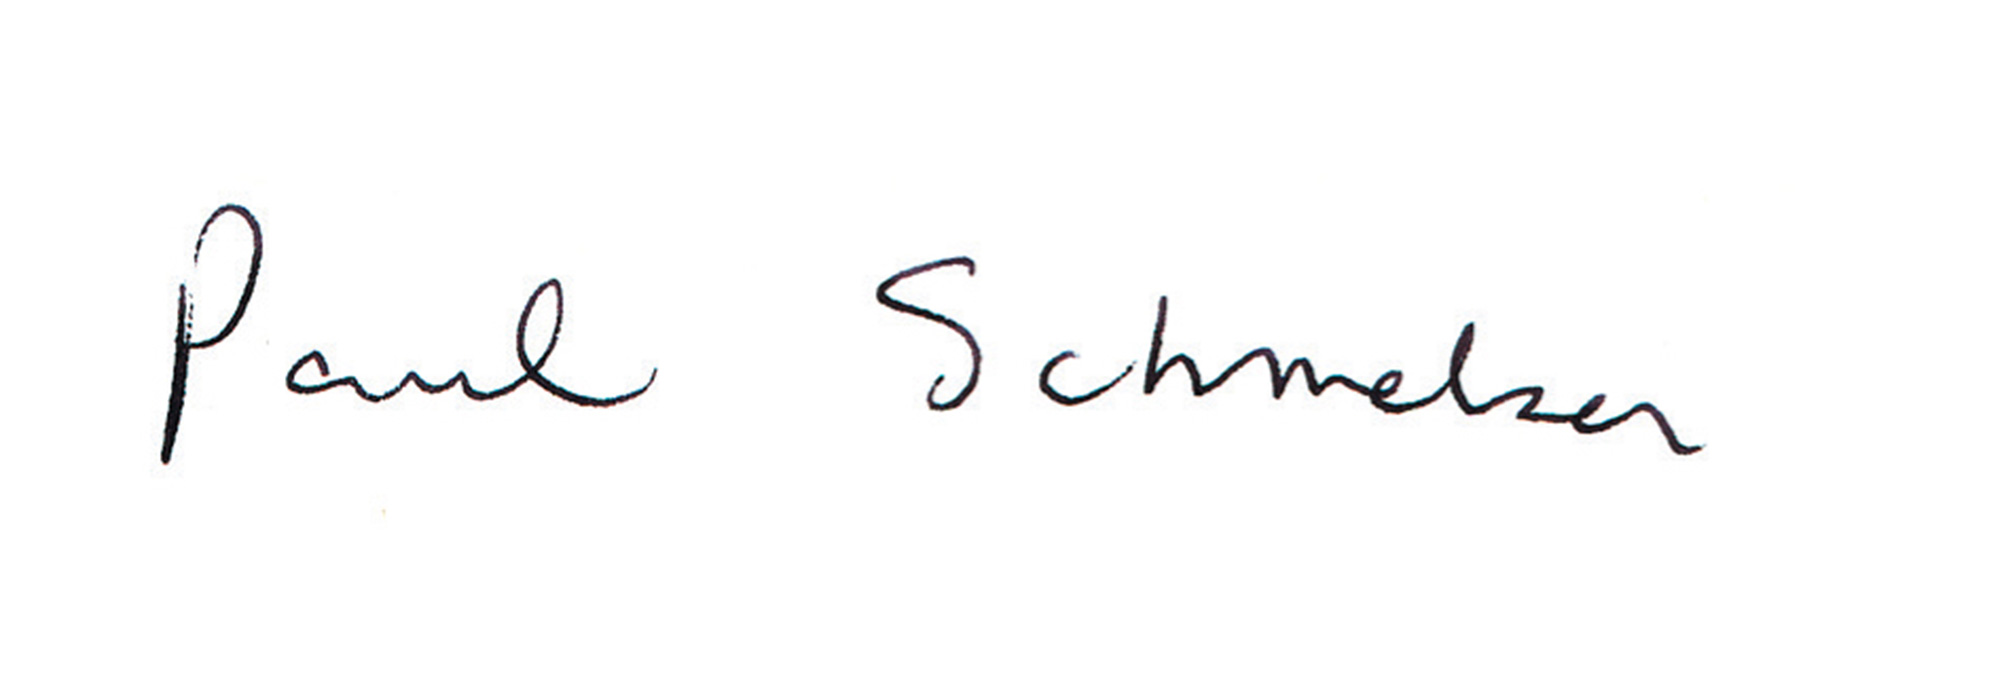 A photograph of David Sedaris's written version of the name Paul Schmelzer.